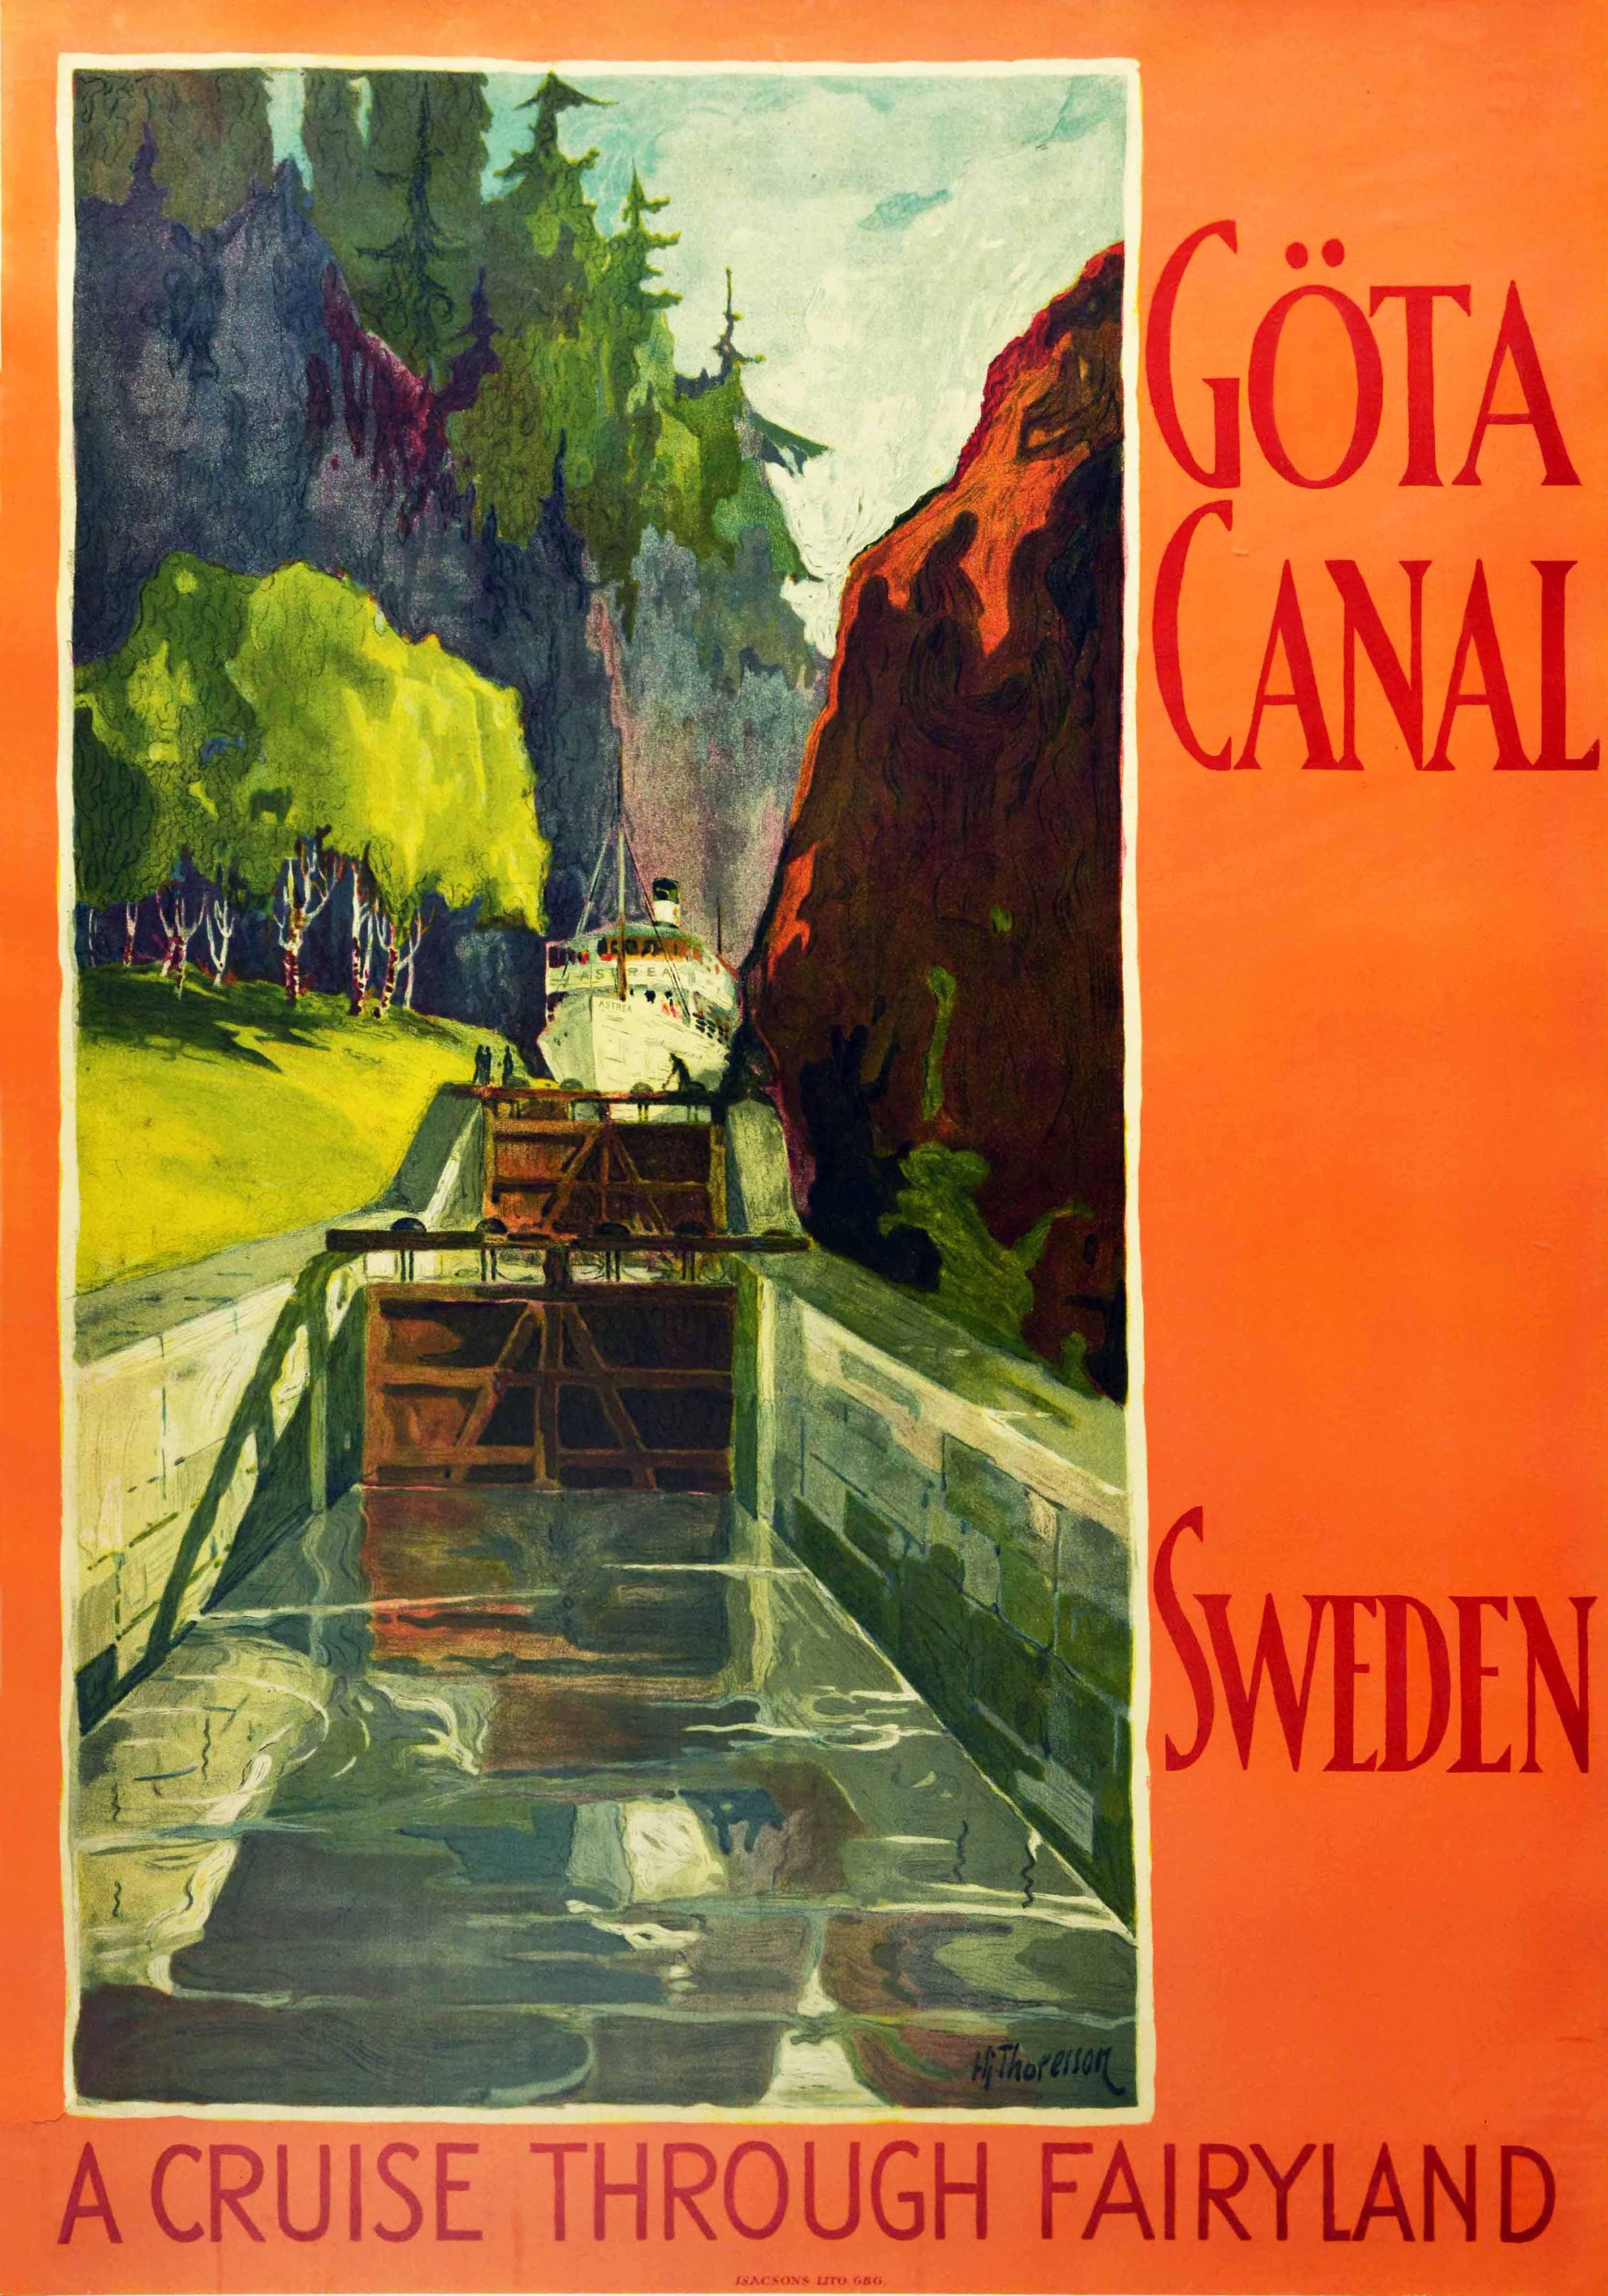 Hj. Thoresson Print - Original Vintage Poster Gota Canal Cruise Through Fairyland Sweden Sailing Art